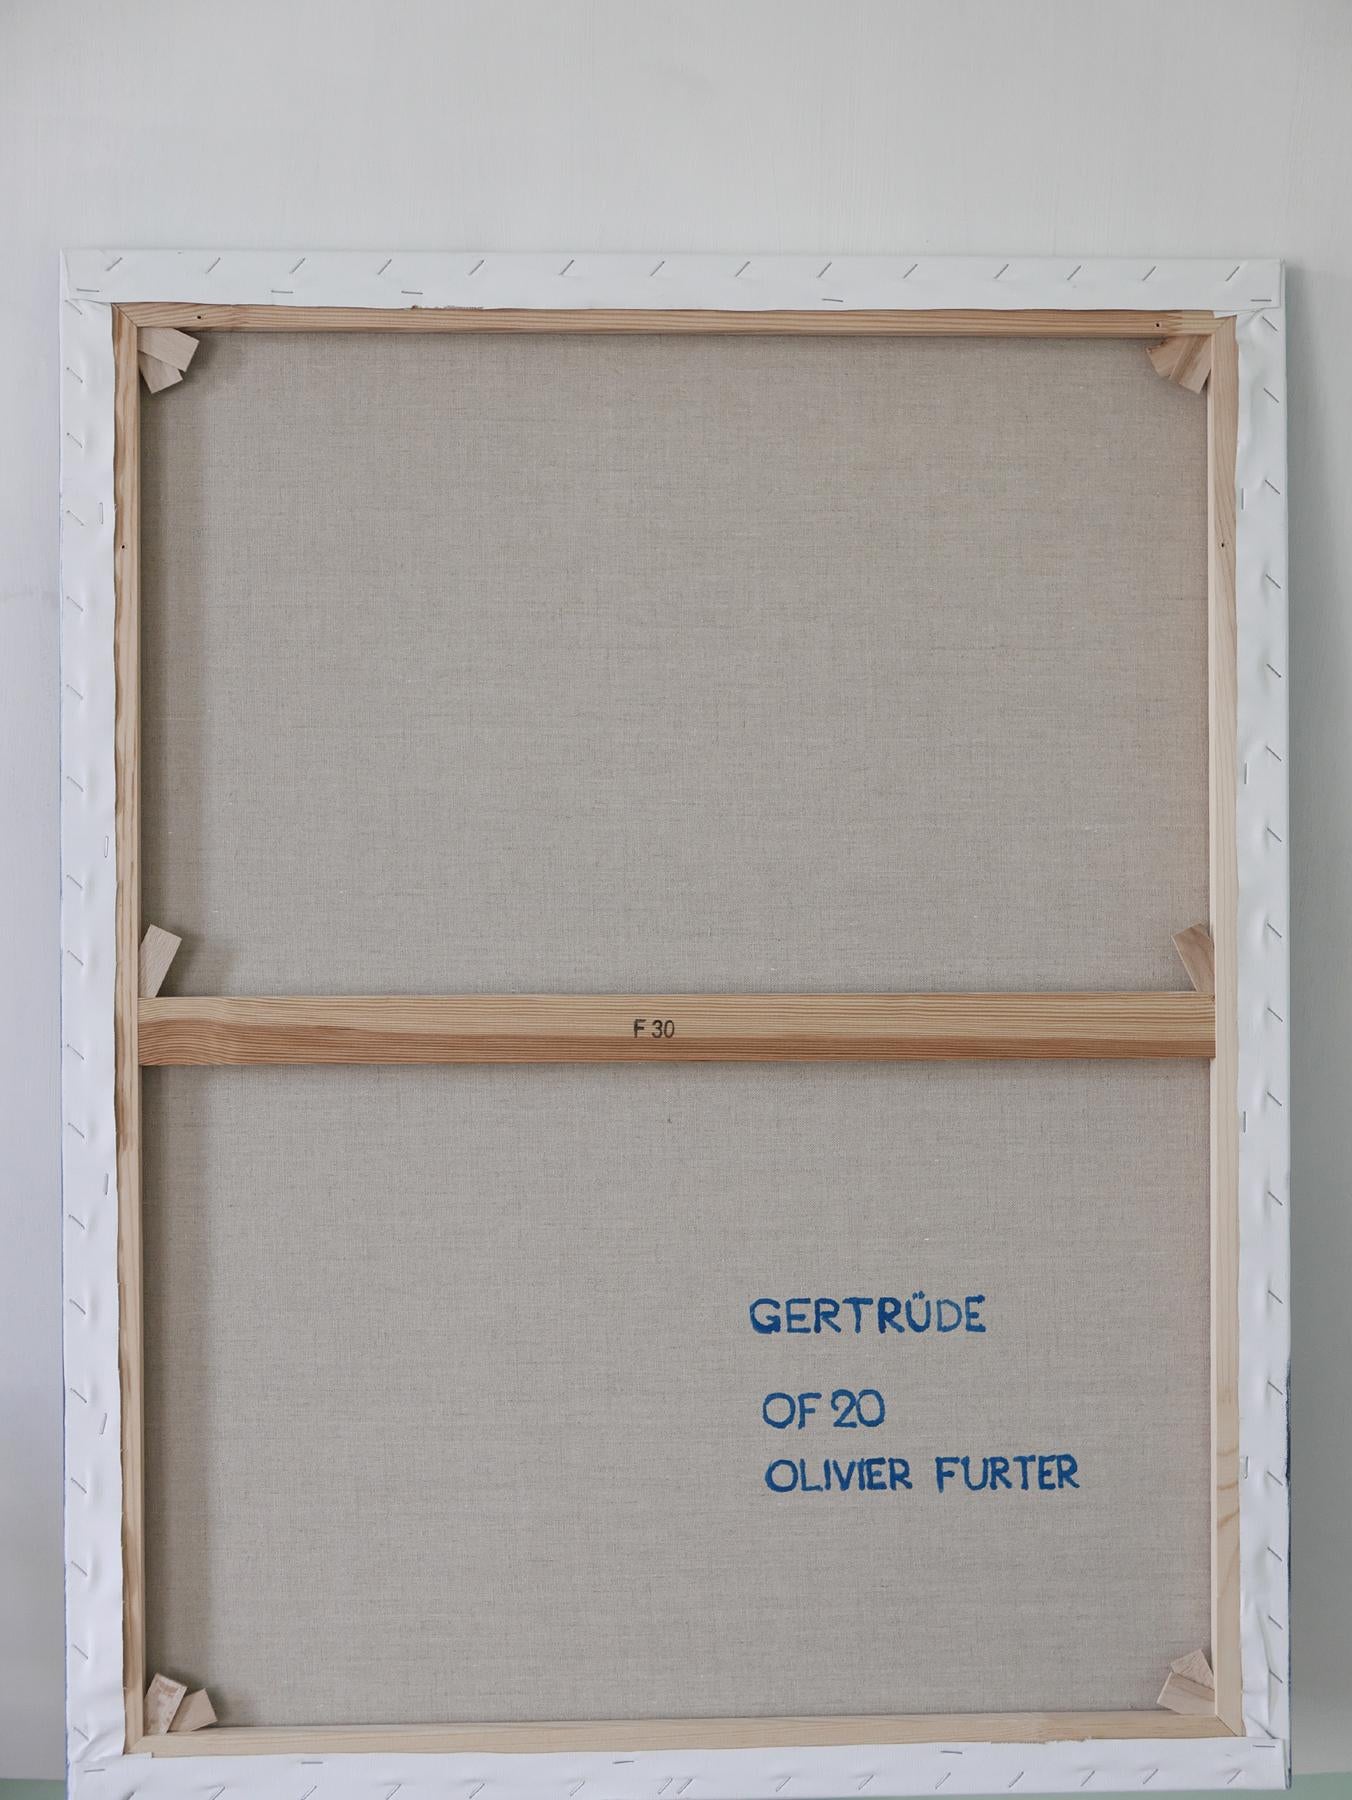 Art contemporain suisse d'Olivier Furter - Gertrüde en vente 2